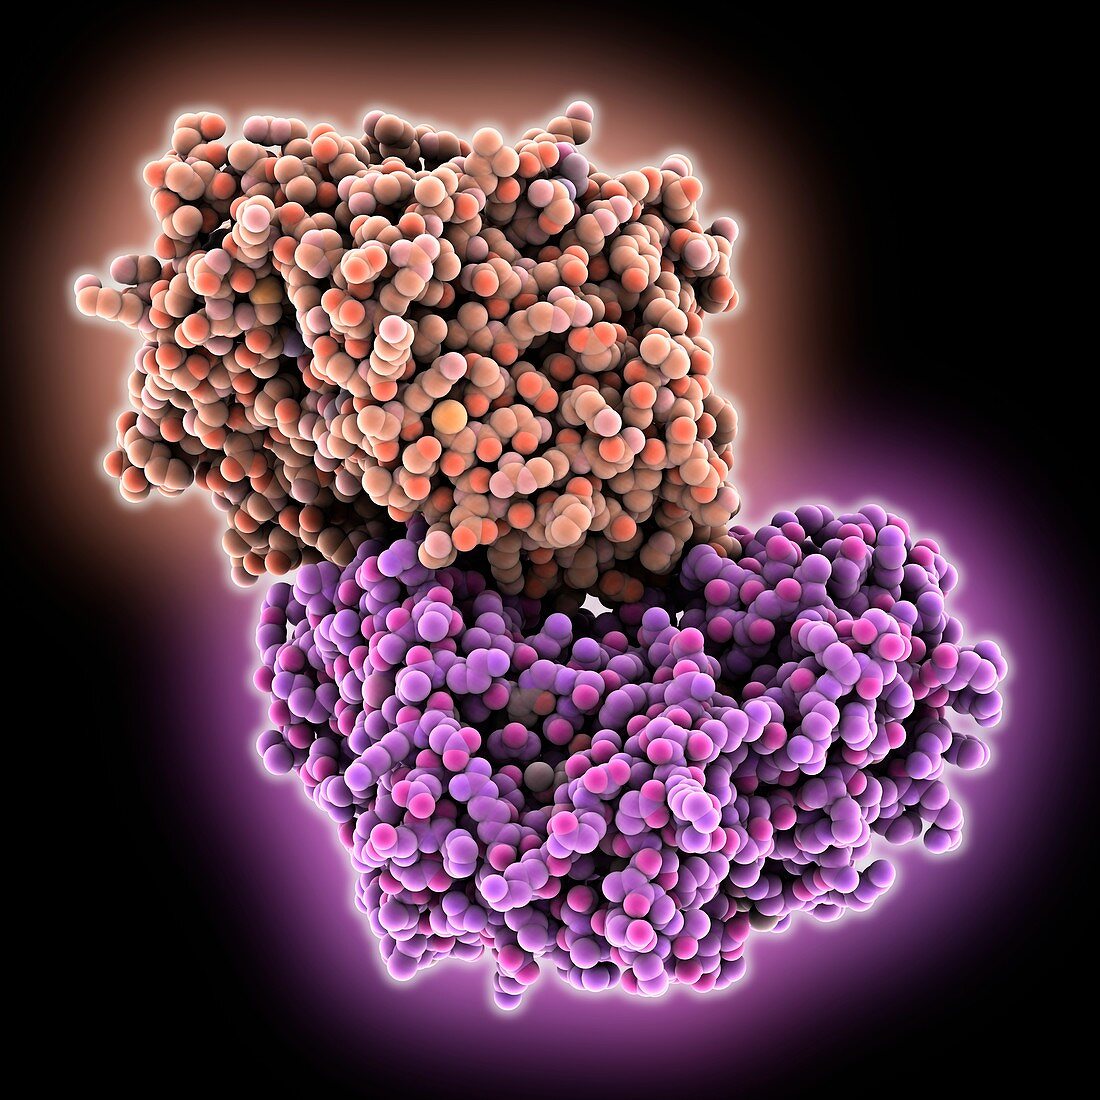 Hepatitis C virus RNA polymerase